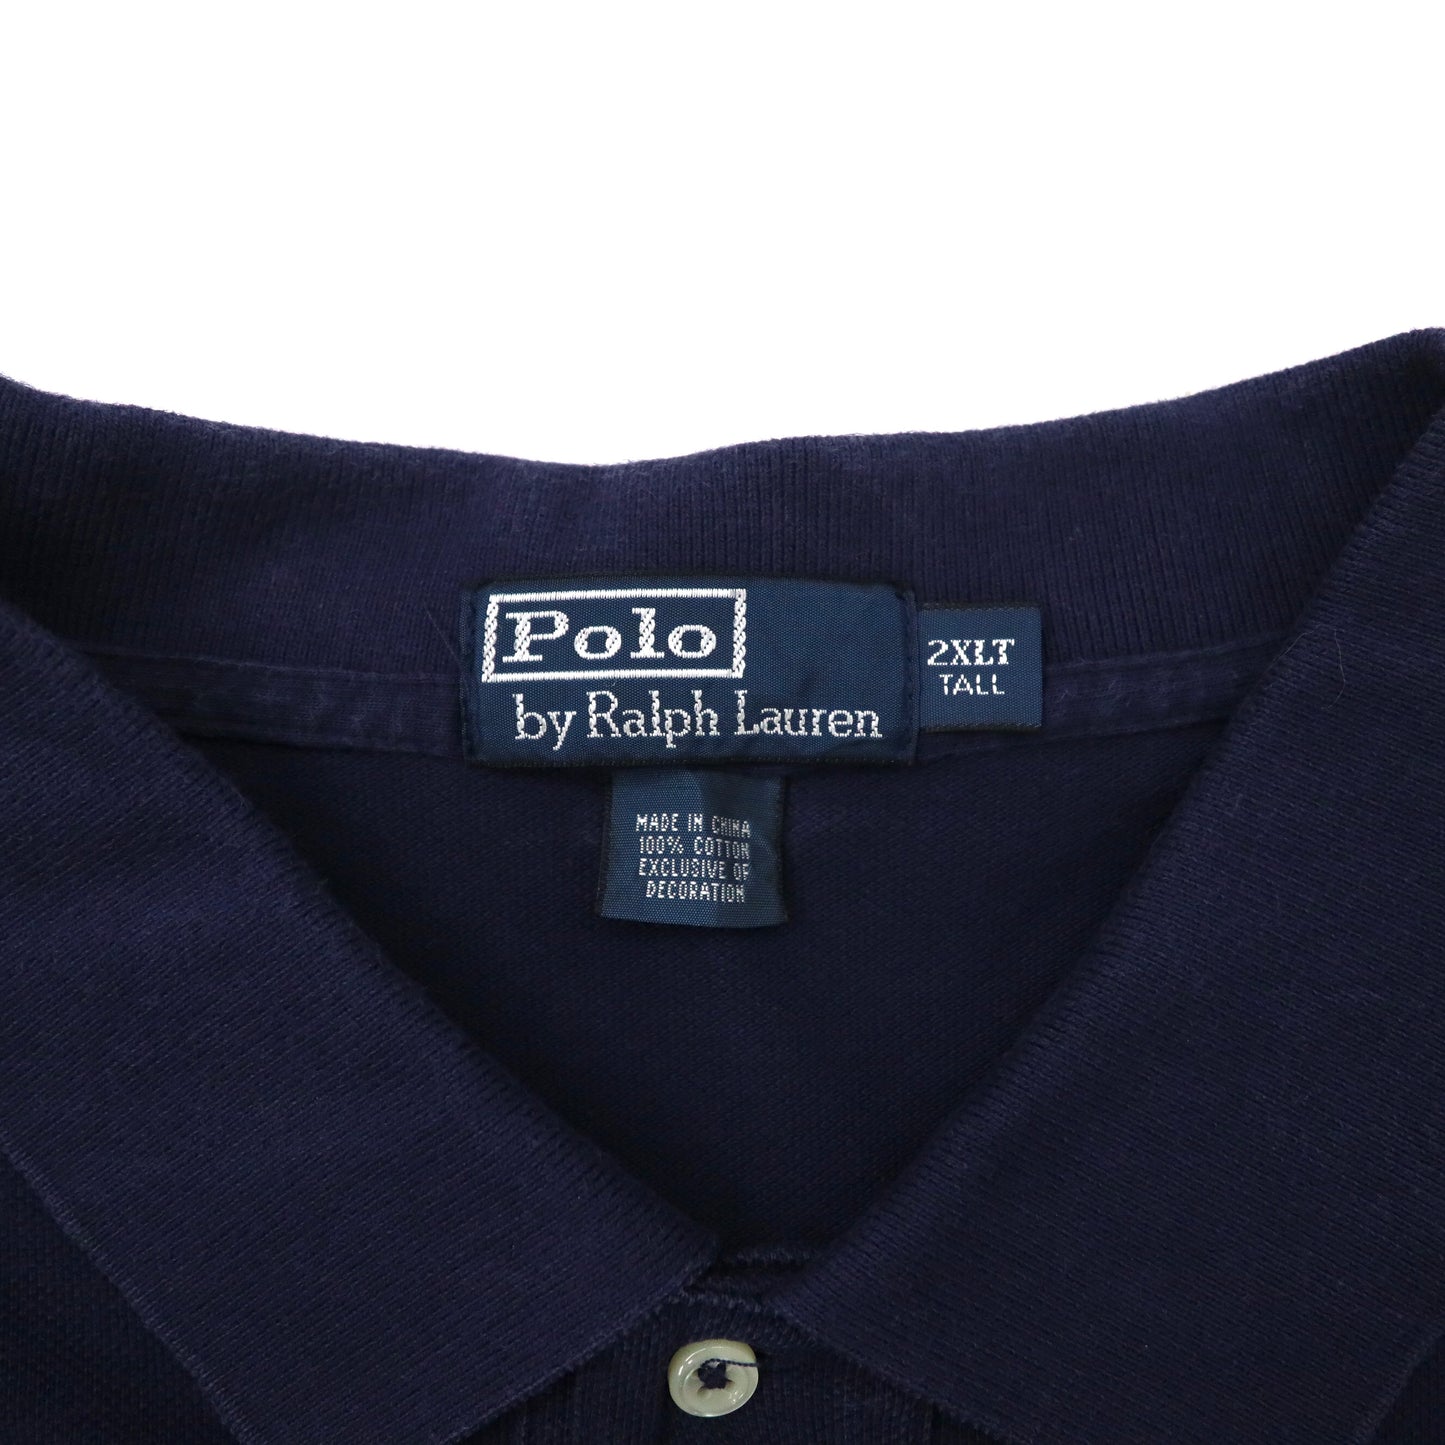 Polo by Ralph Lauren ビッグサイズ 長袖ポロシャツ 2XLT ネイビー コットン 鹿の子 スモールポニー刺繍